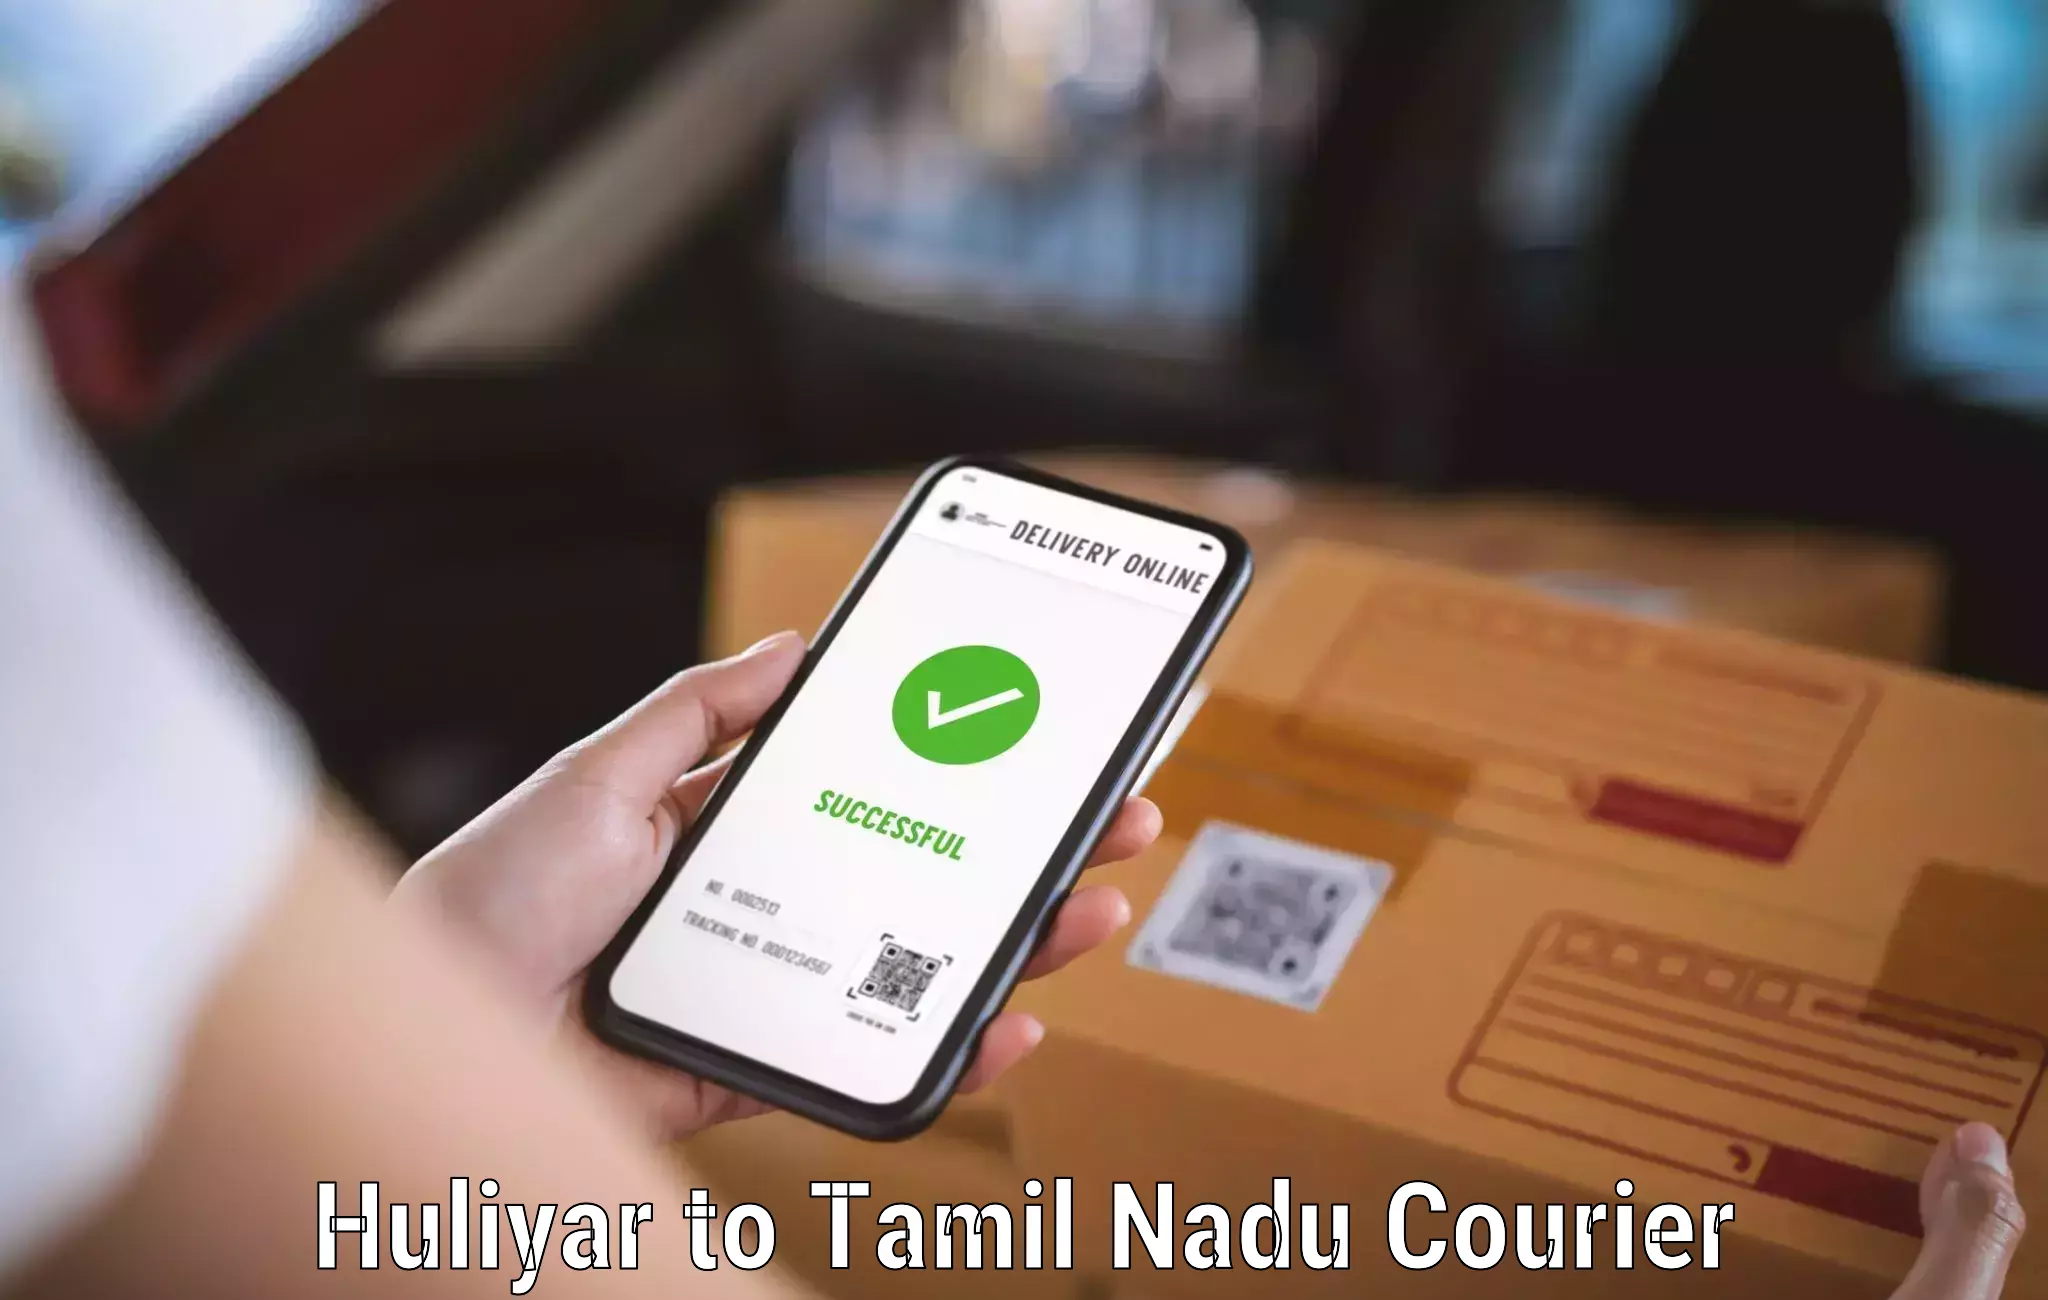 Budget-friendly shipping Huliyar to IIIT Tiruchirappalli